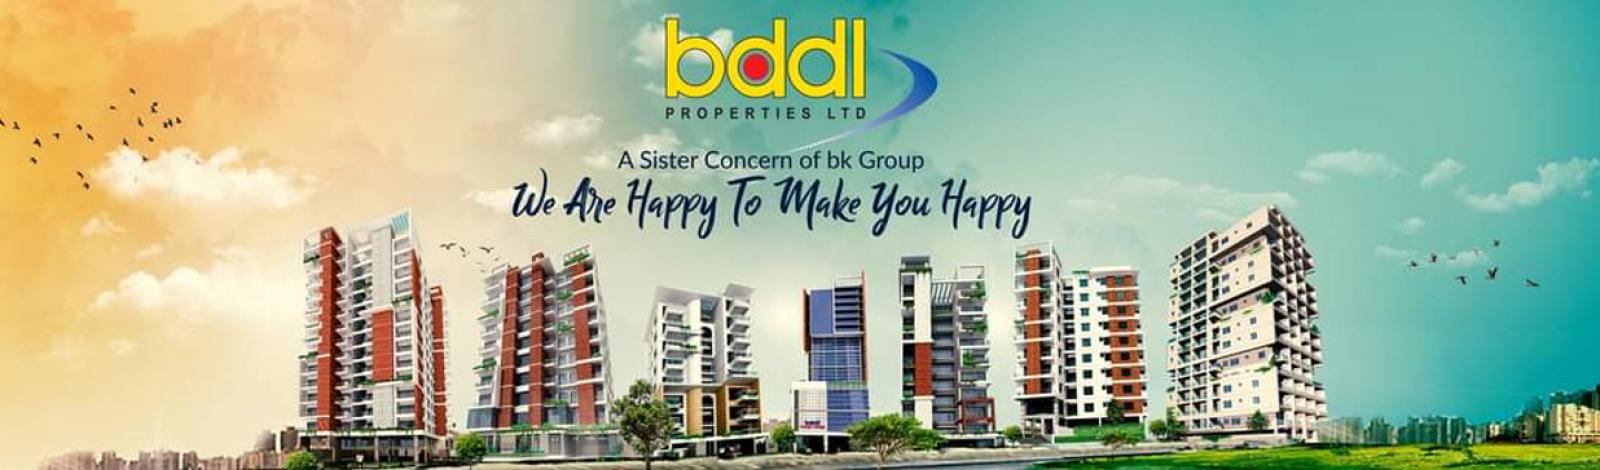 BDDL Properties Ltd. banner